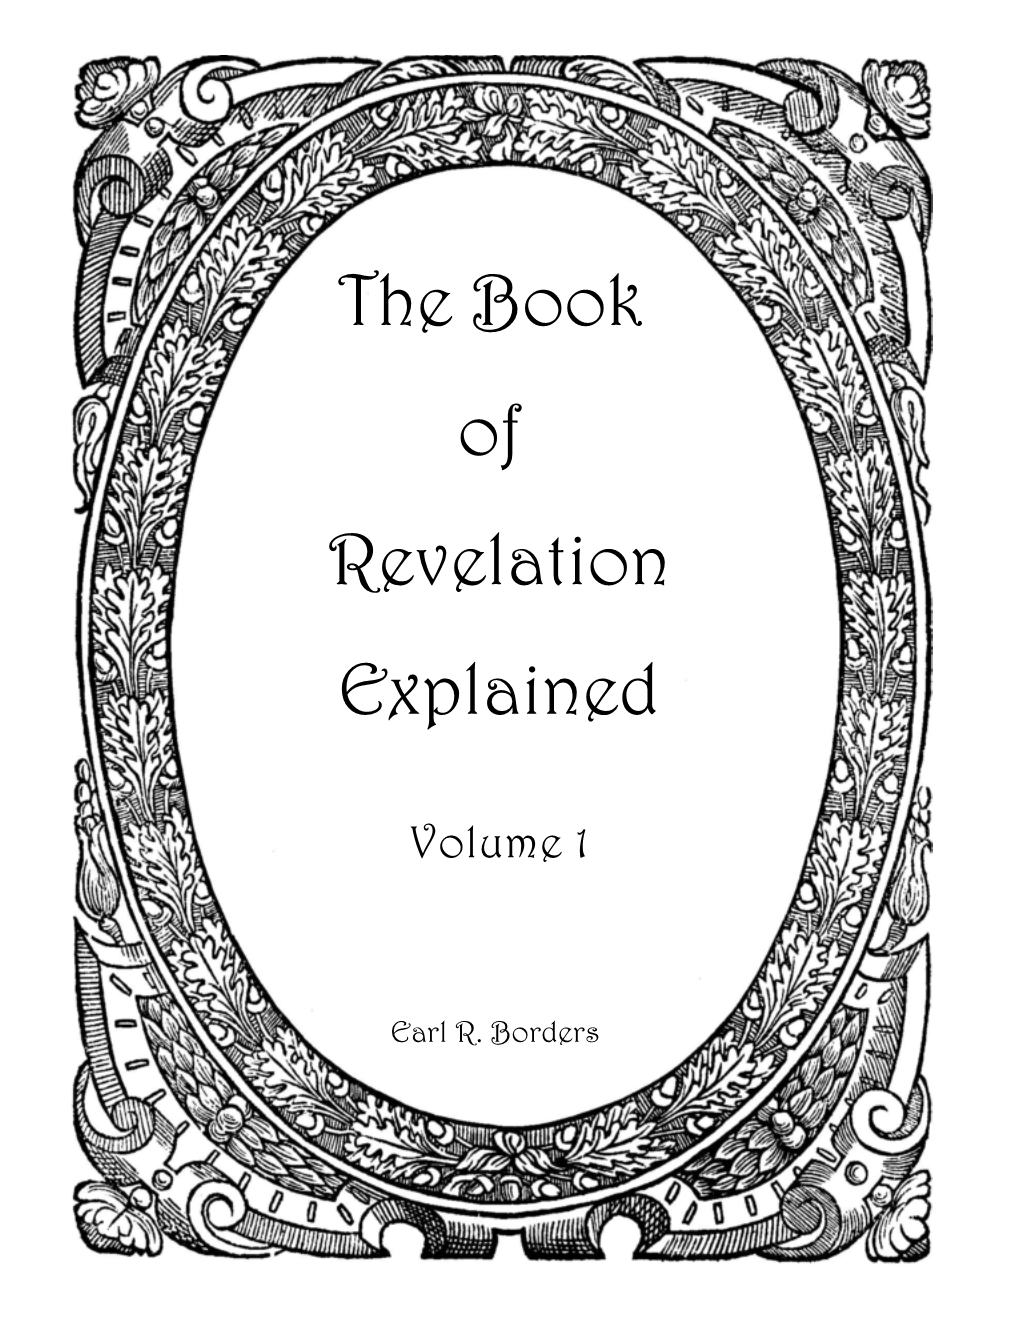 The Book of Revelation Explained Volume 1